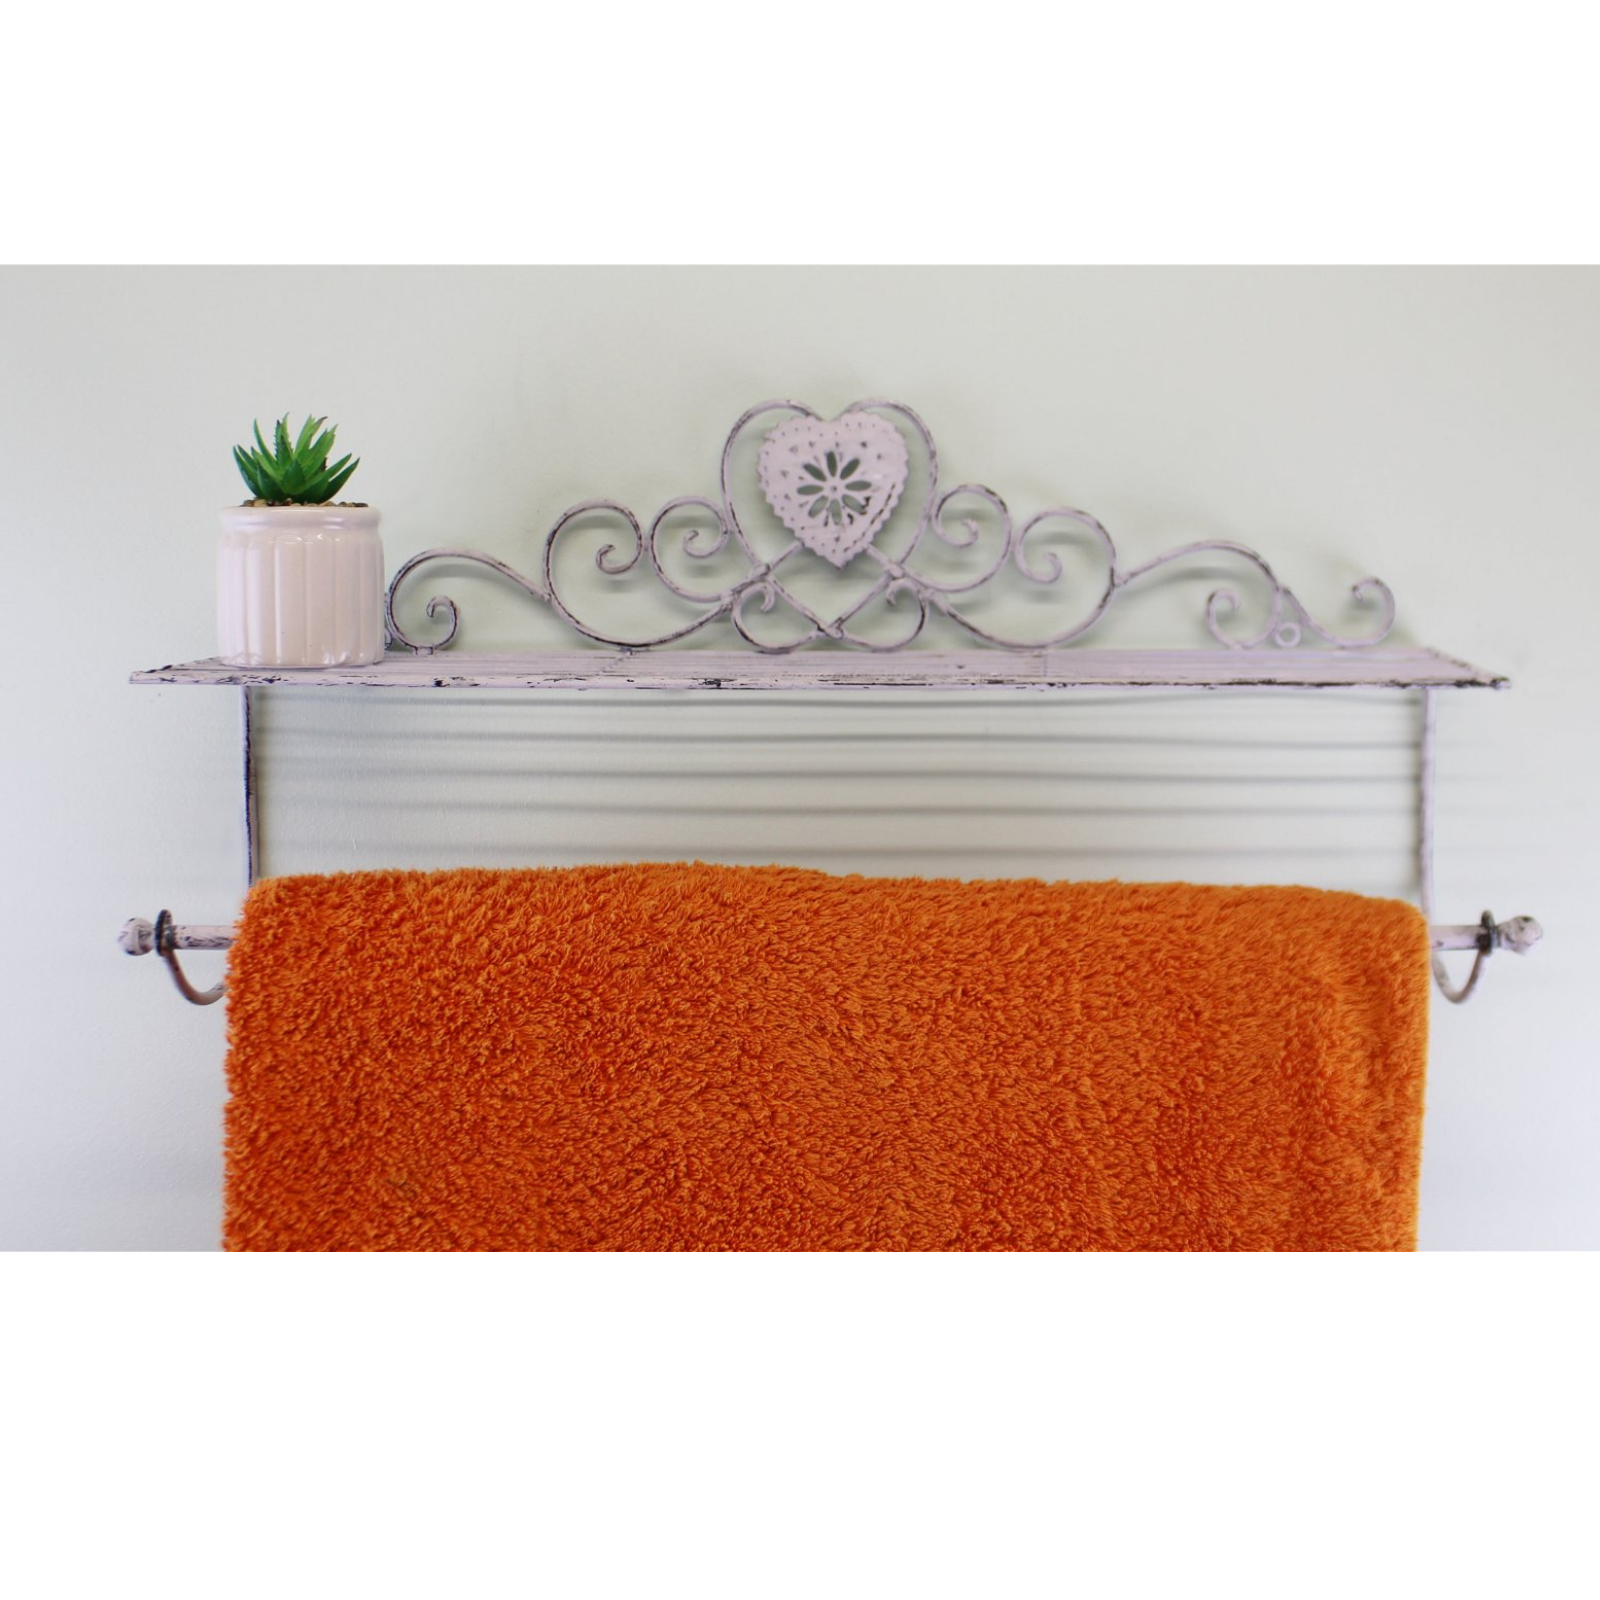 Grey Heart Wall Shelf With Towel Rail